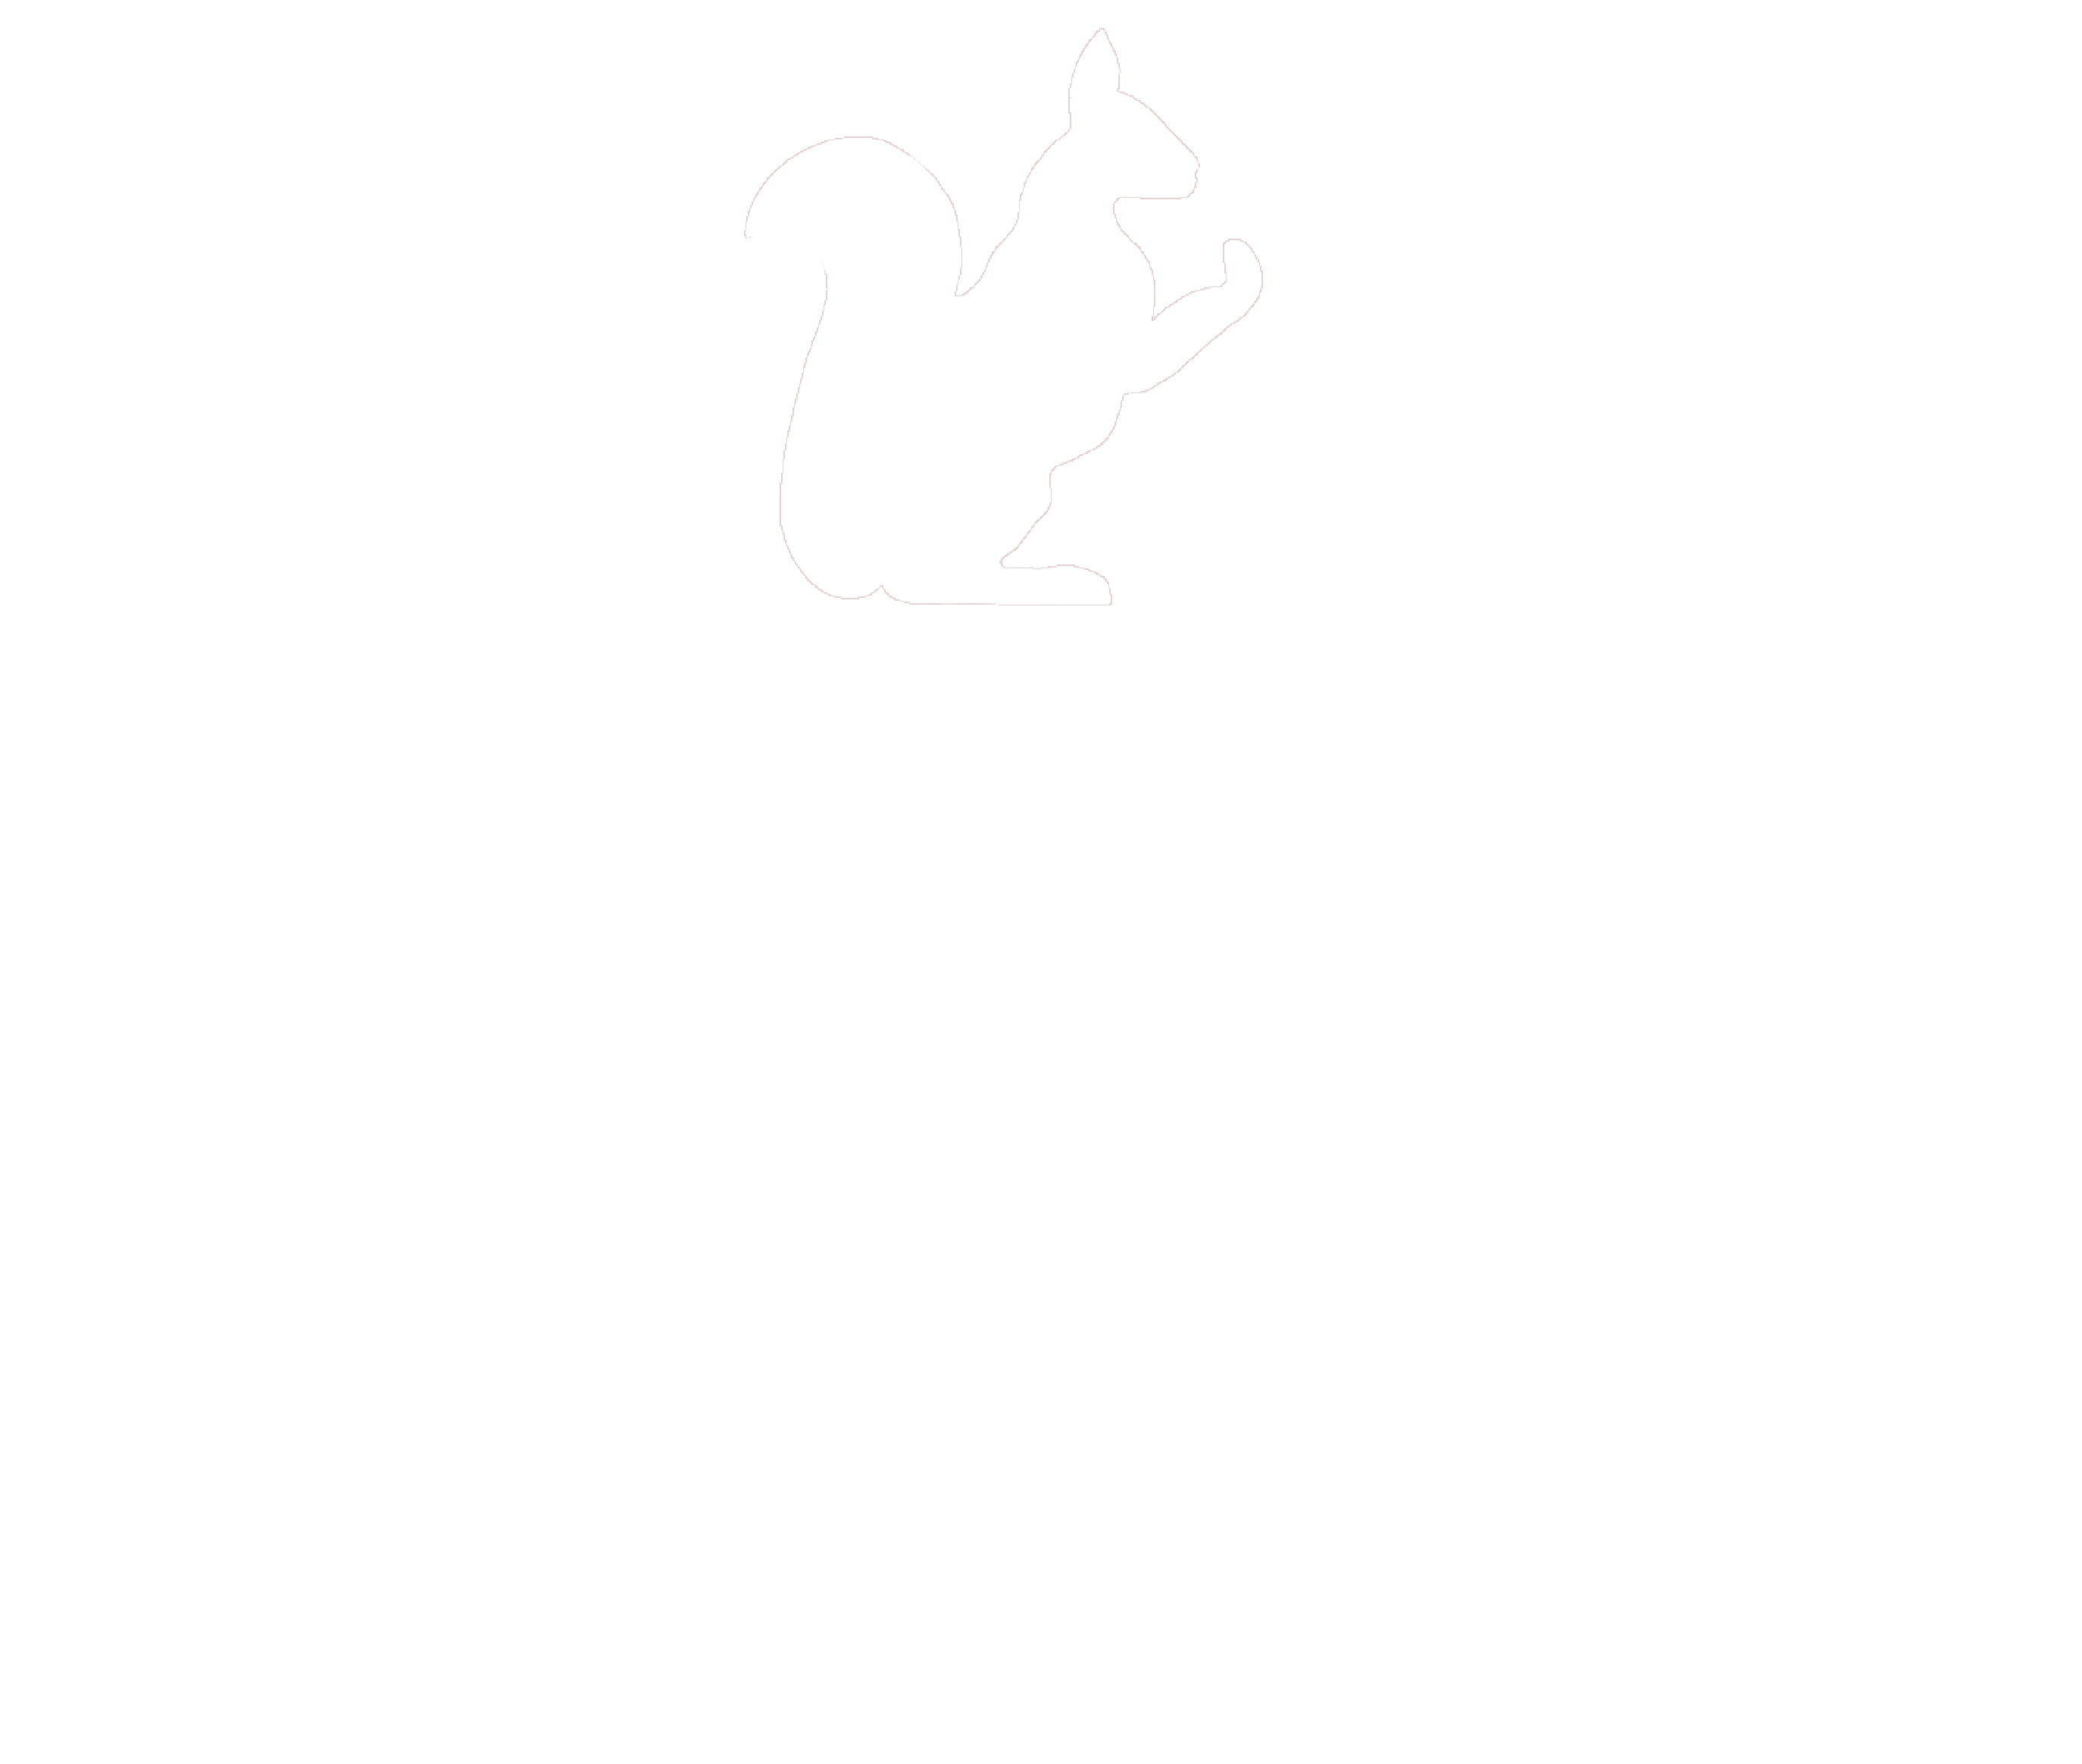 Pinkney Park